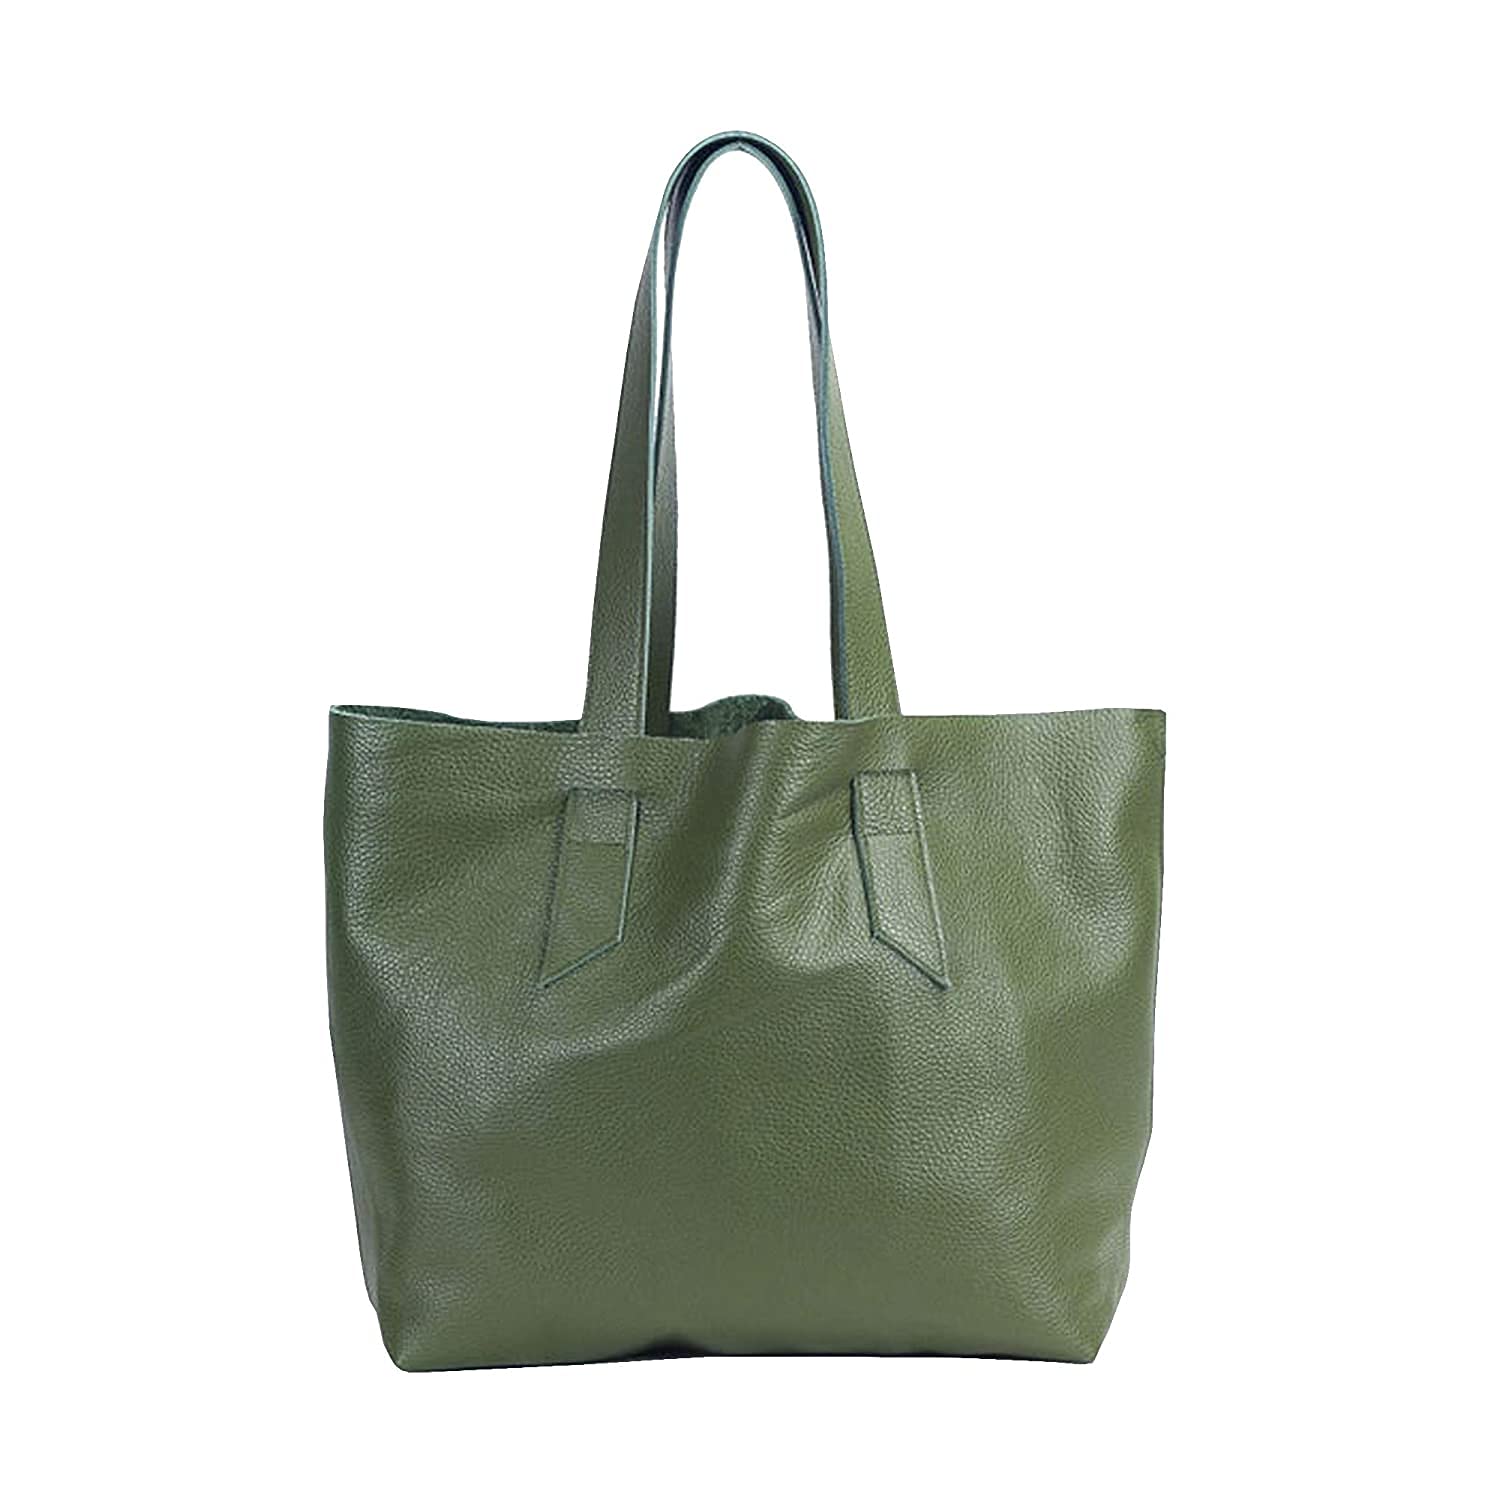 Buy ILEX 7509 BLACK WOMEN GRAB BAG Women Handbags Shoulder Hobo Bag Purse  With Long Strap at Amazon.in